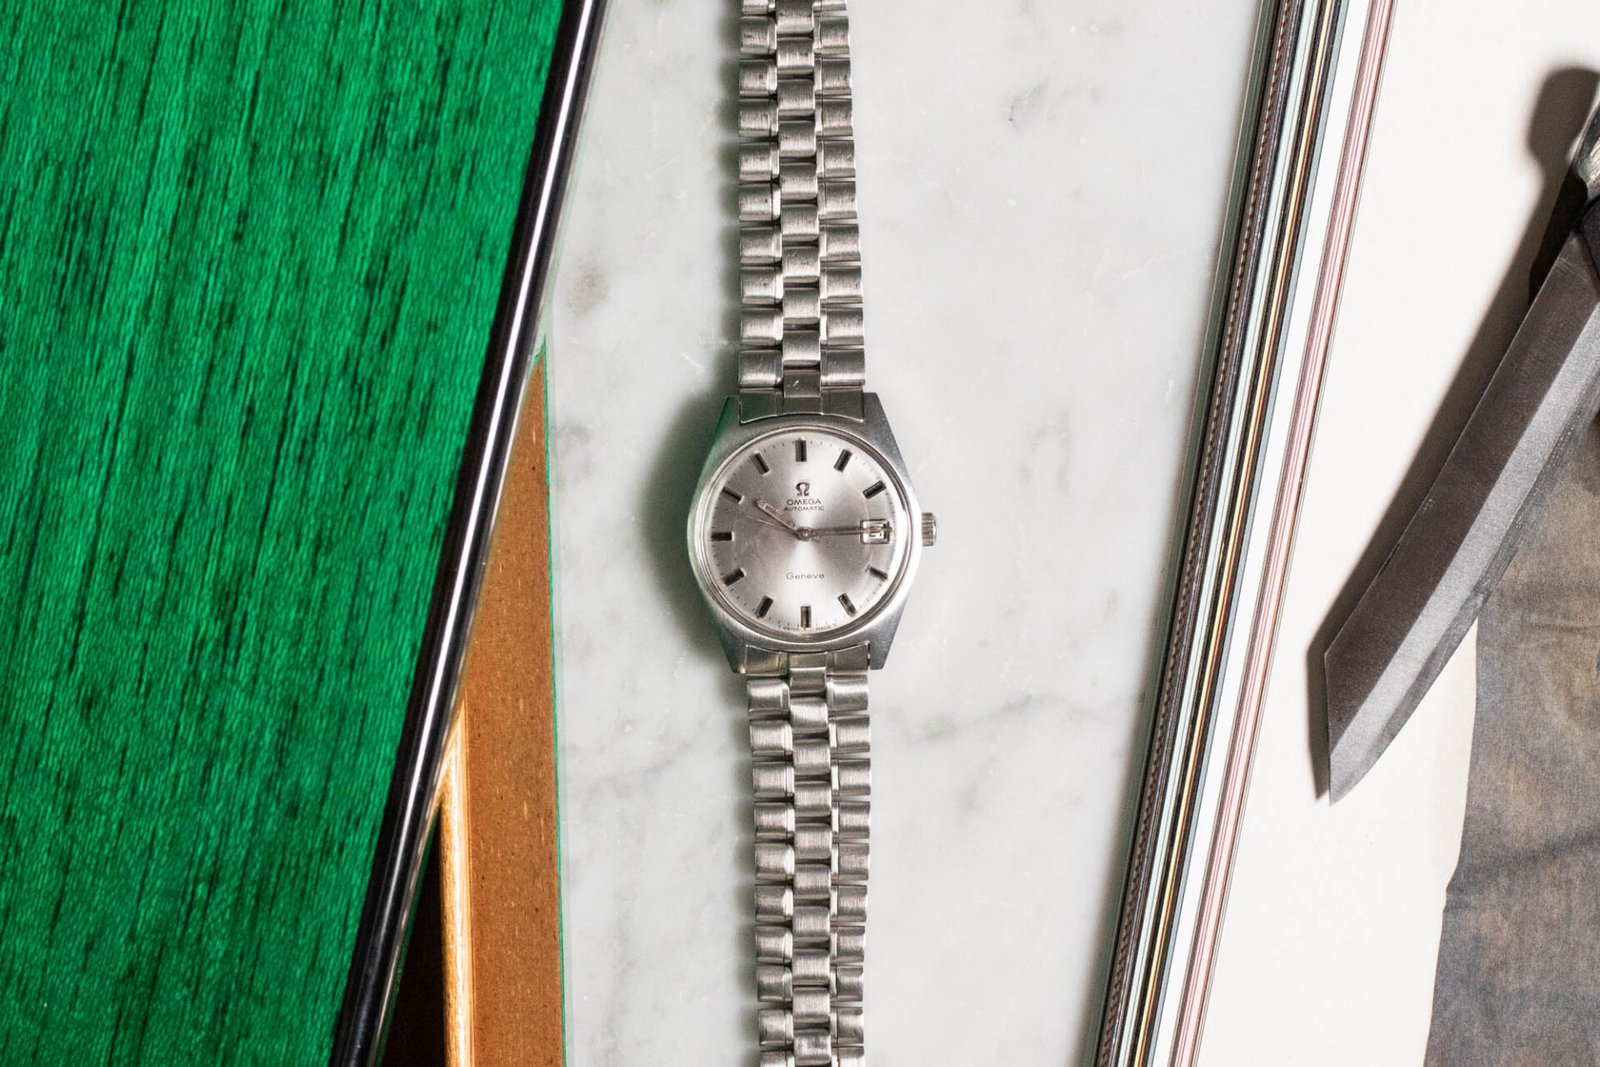 Omega Genève Automatic - Selection of vintage watches Joseph Bonnie